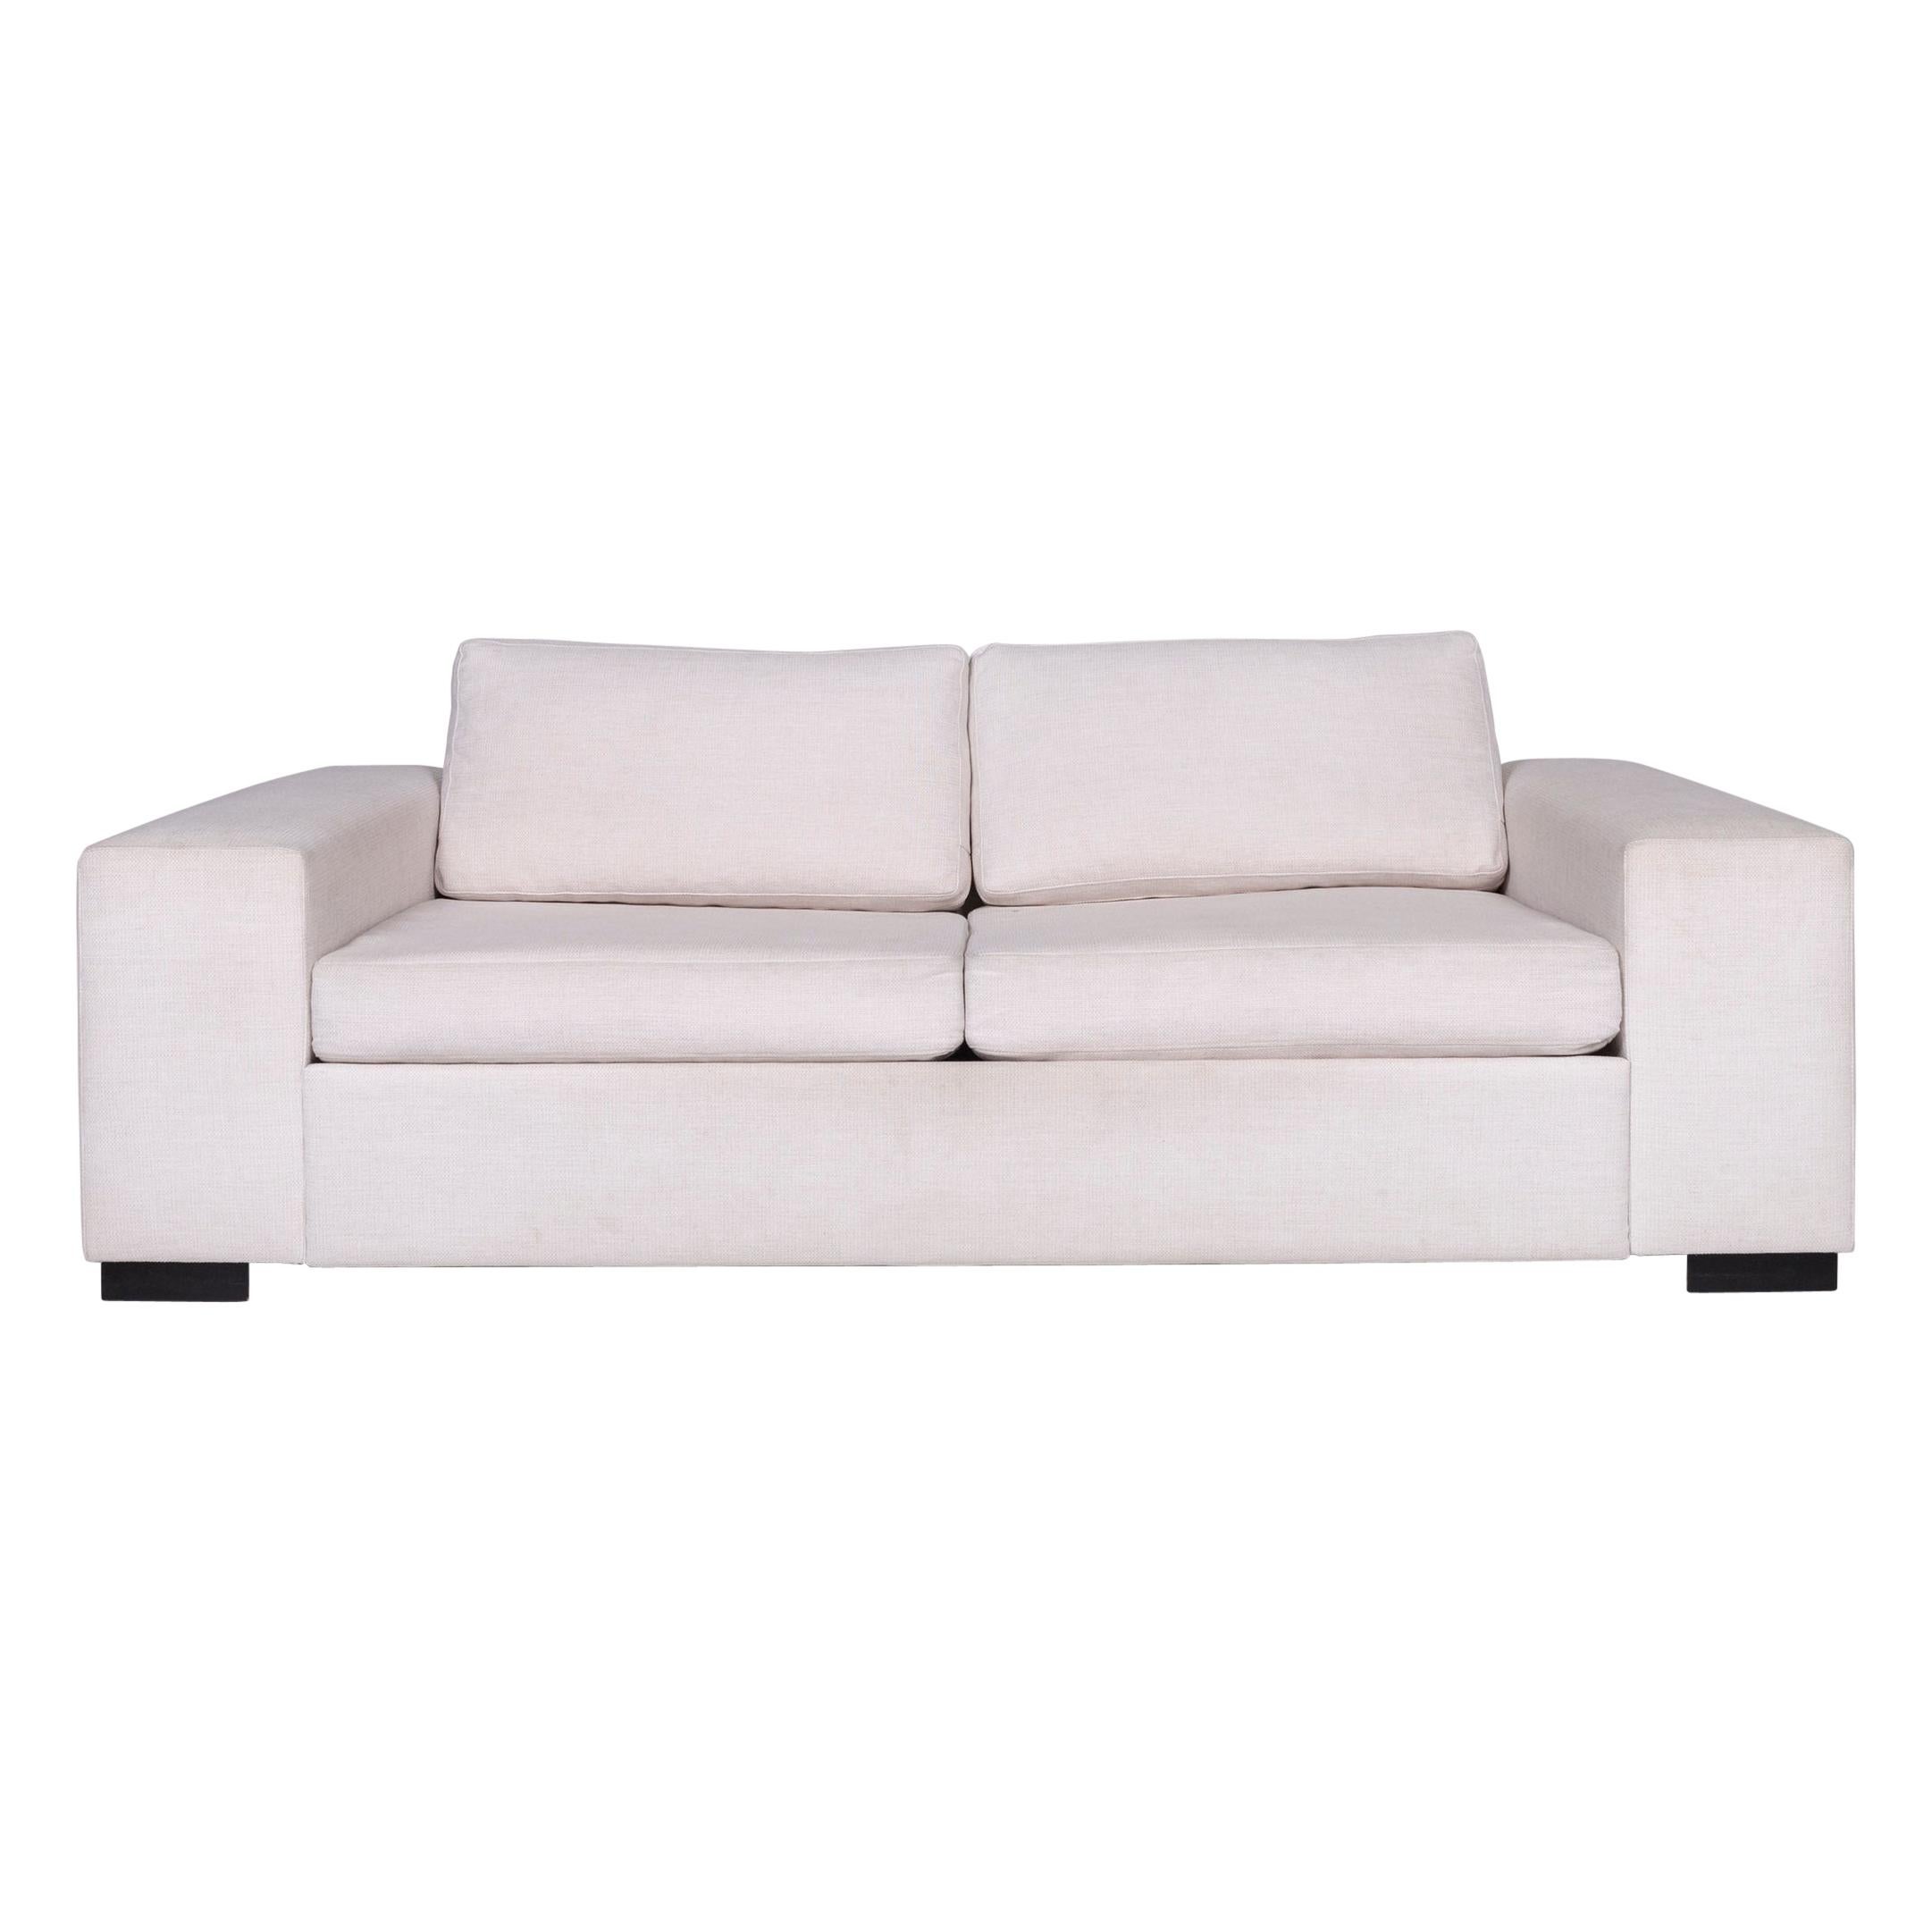 BoConcept Terni Fabric Sofa Bed Cream White Cream Sleep Function Incl. Mattress